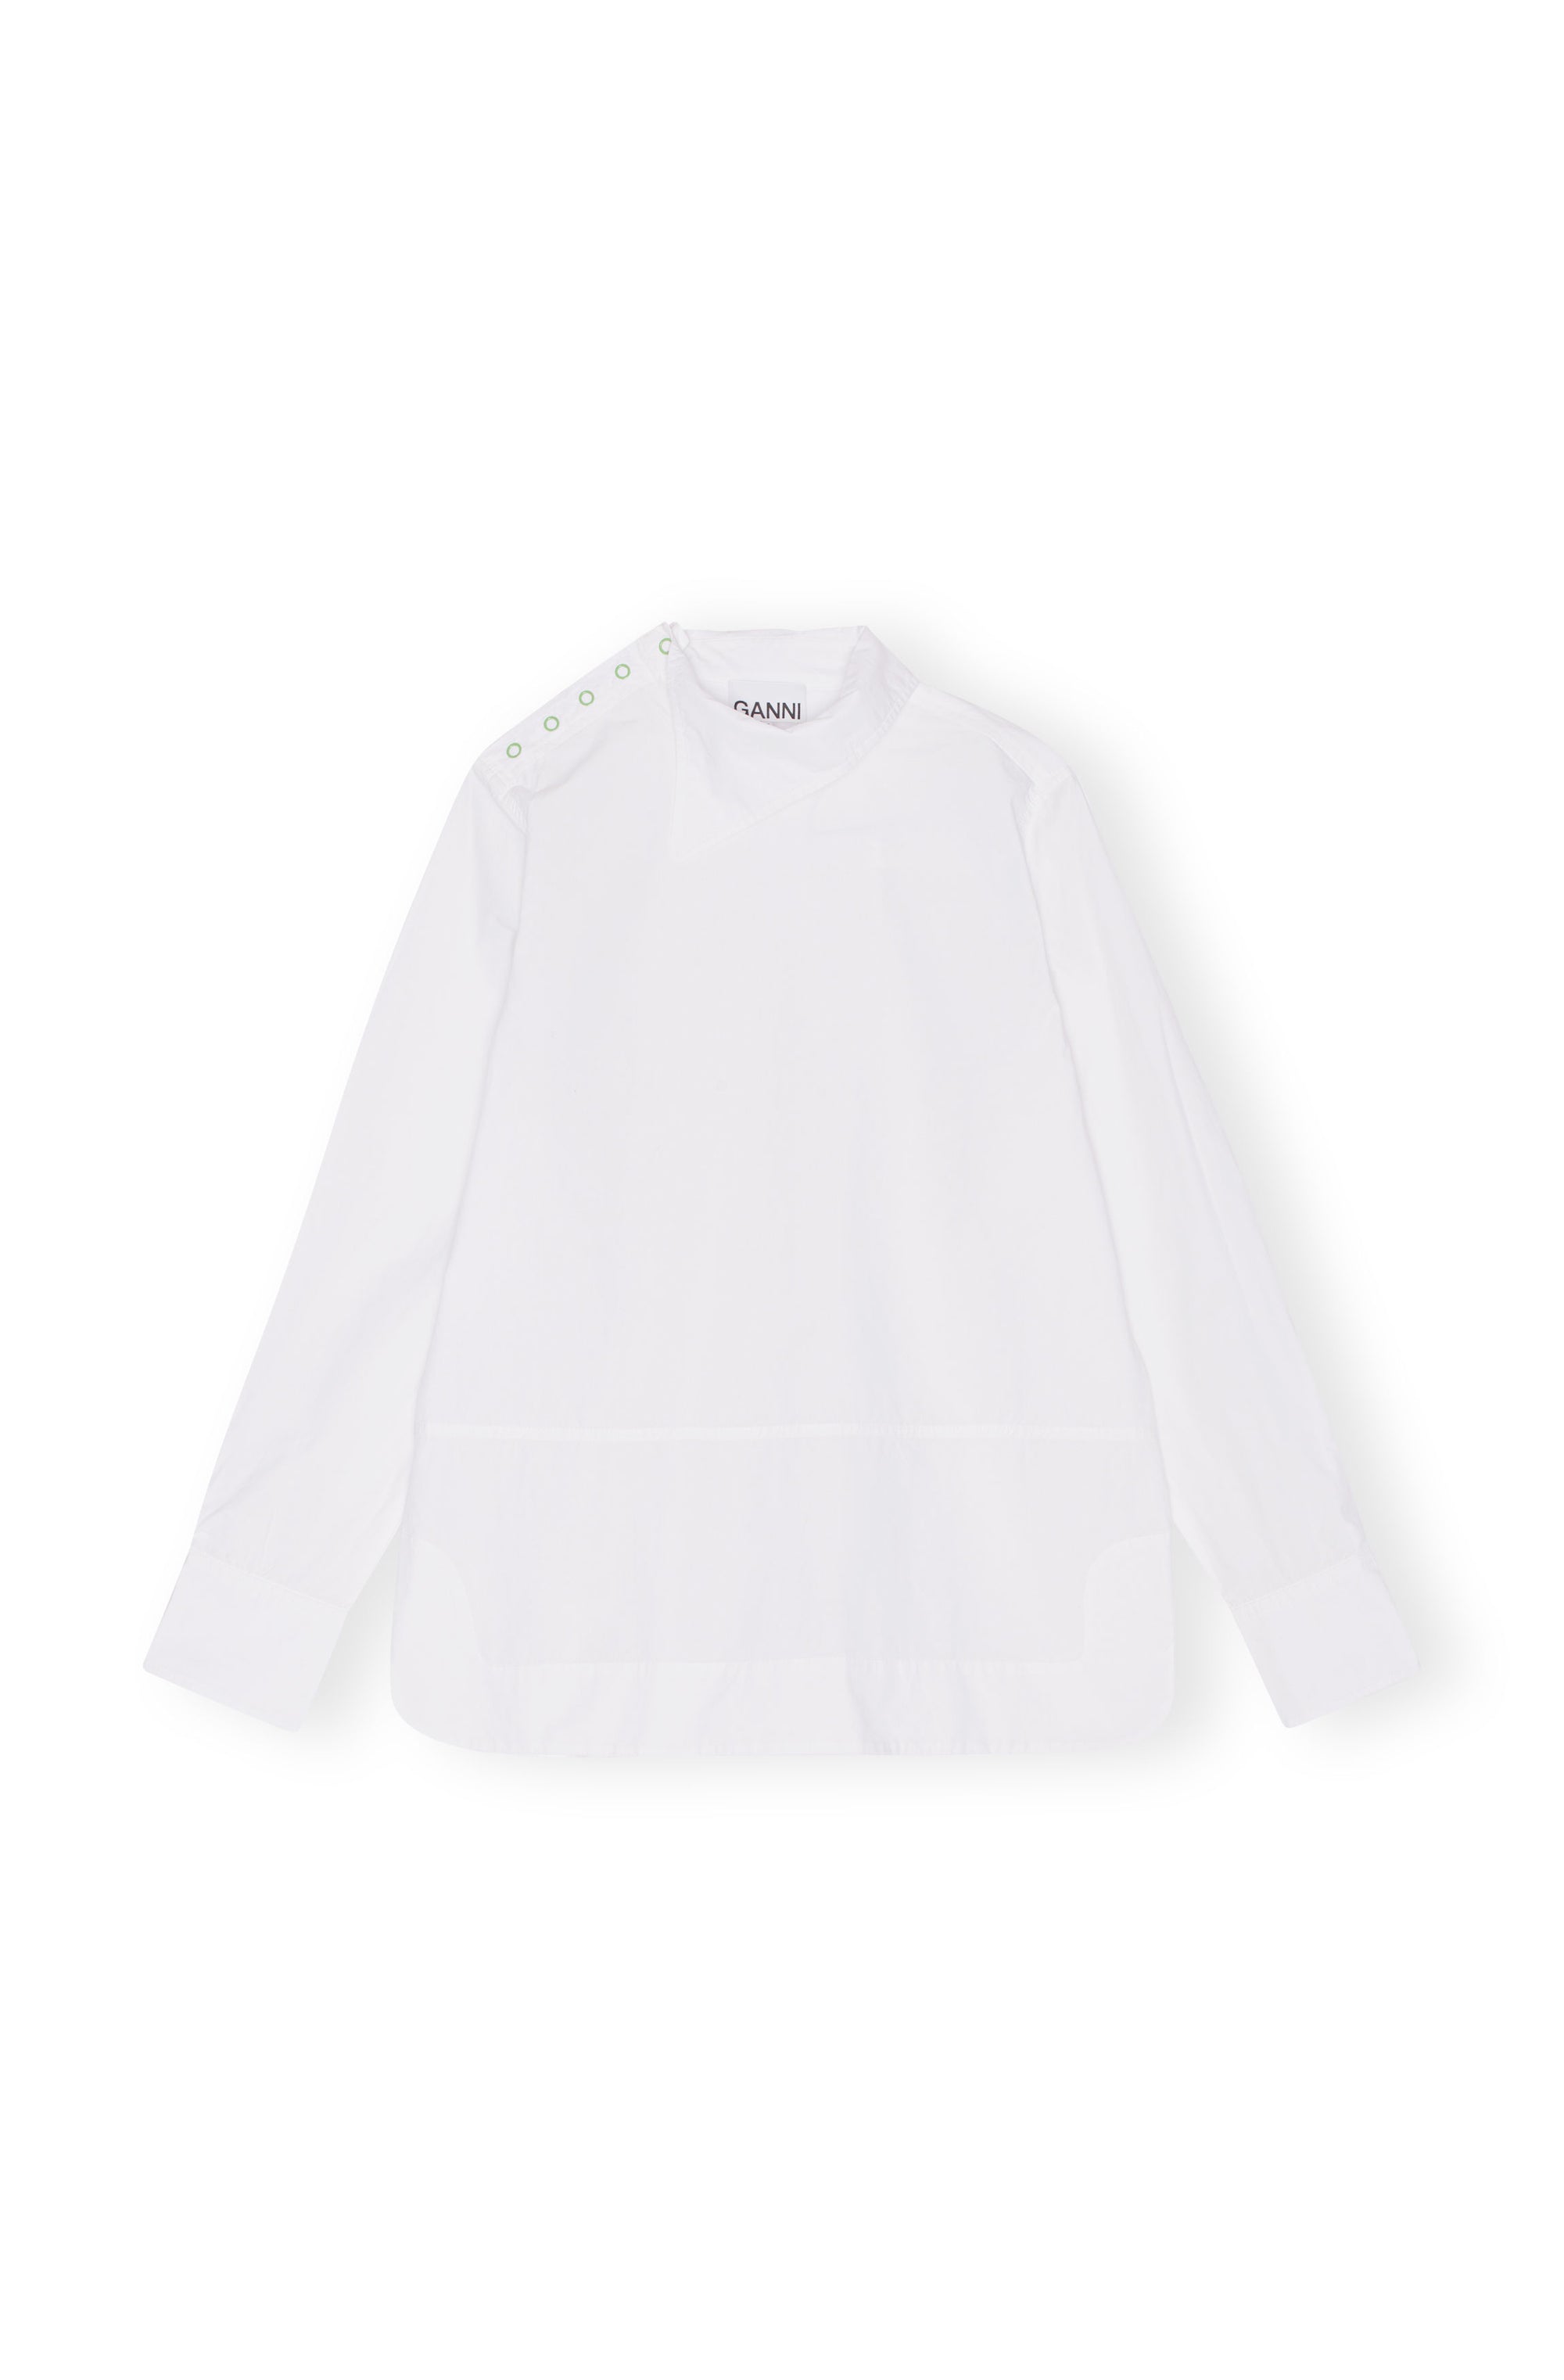 Asymmetrical Collar Shirt in Bright White Cotton Poplin